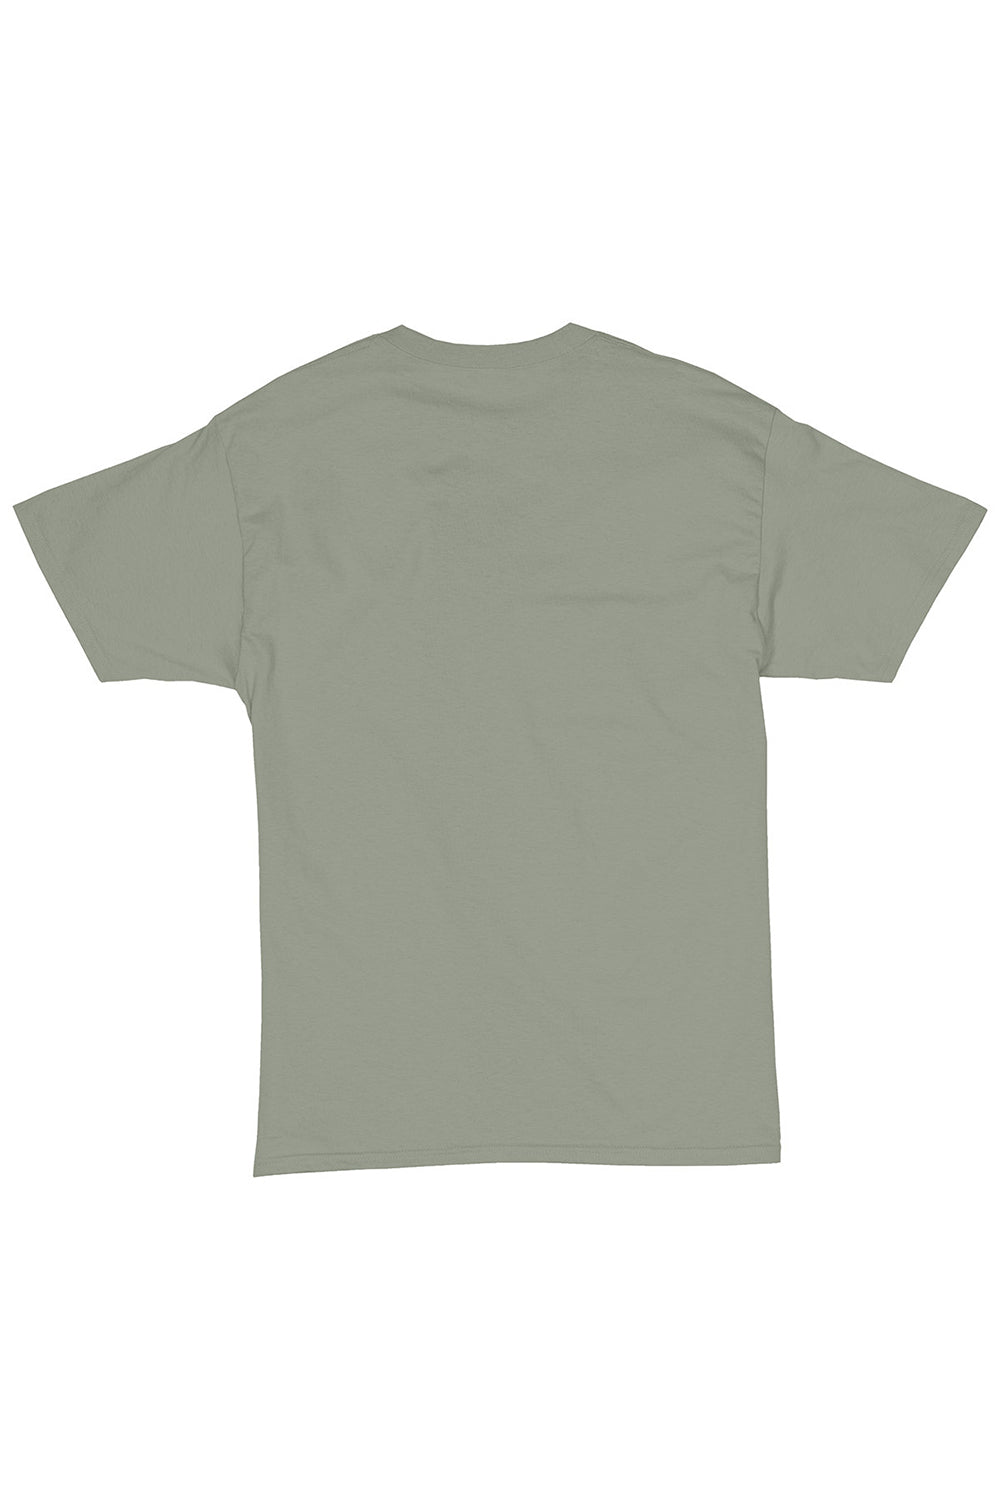 Hanes 5280 Mens ComfortSoft Short Sleeve Crewneck T-Shirt Stonewashed Green Flat Back